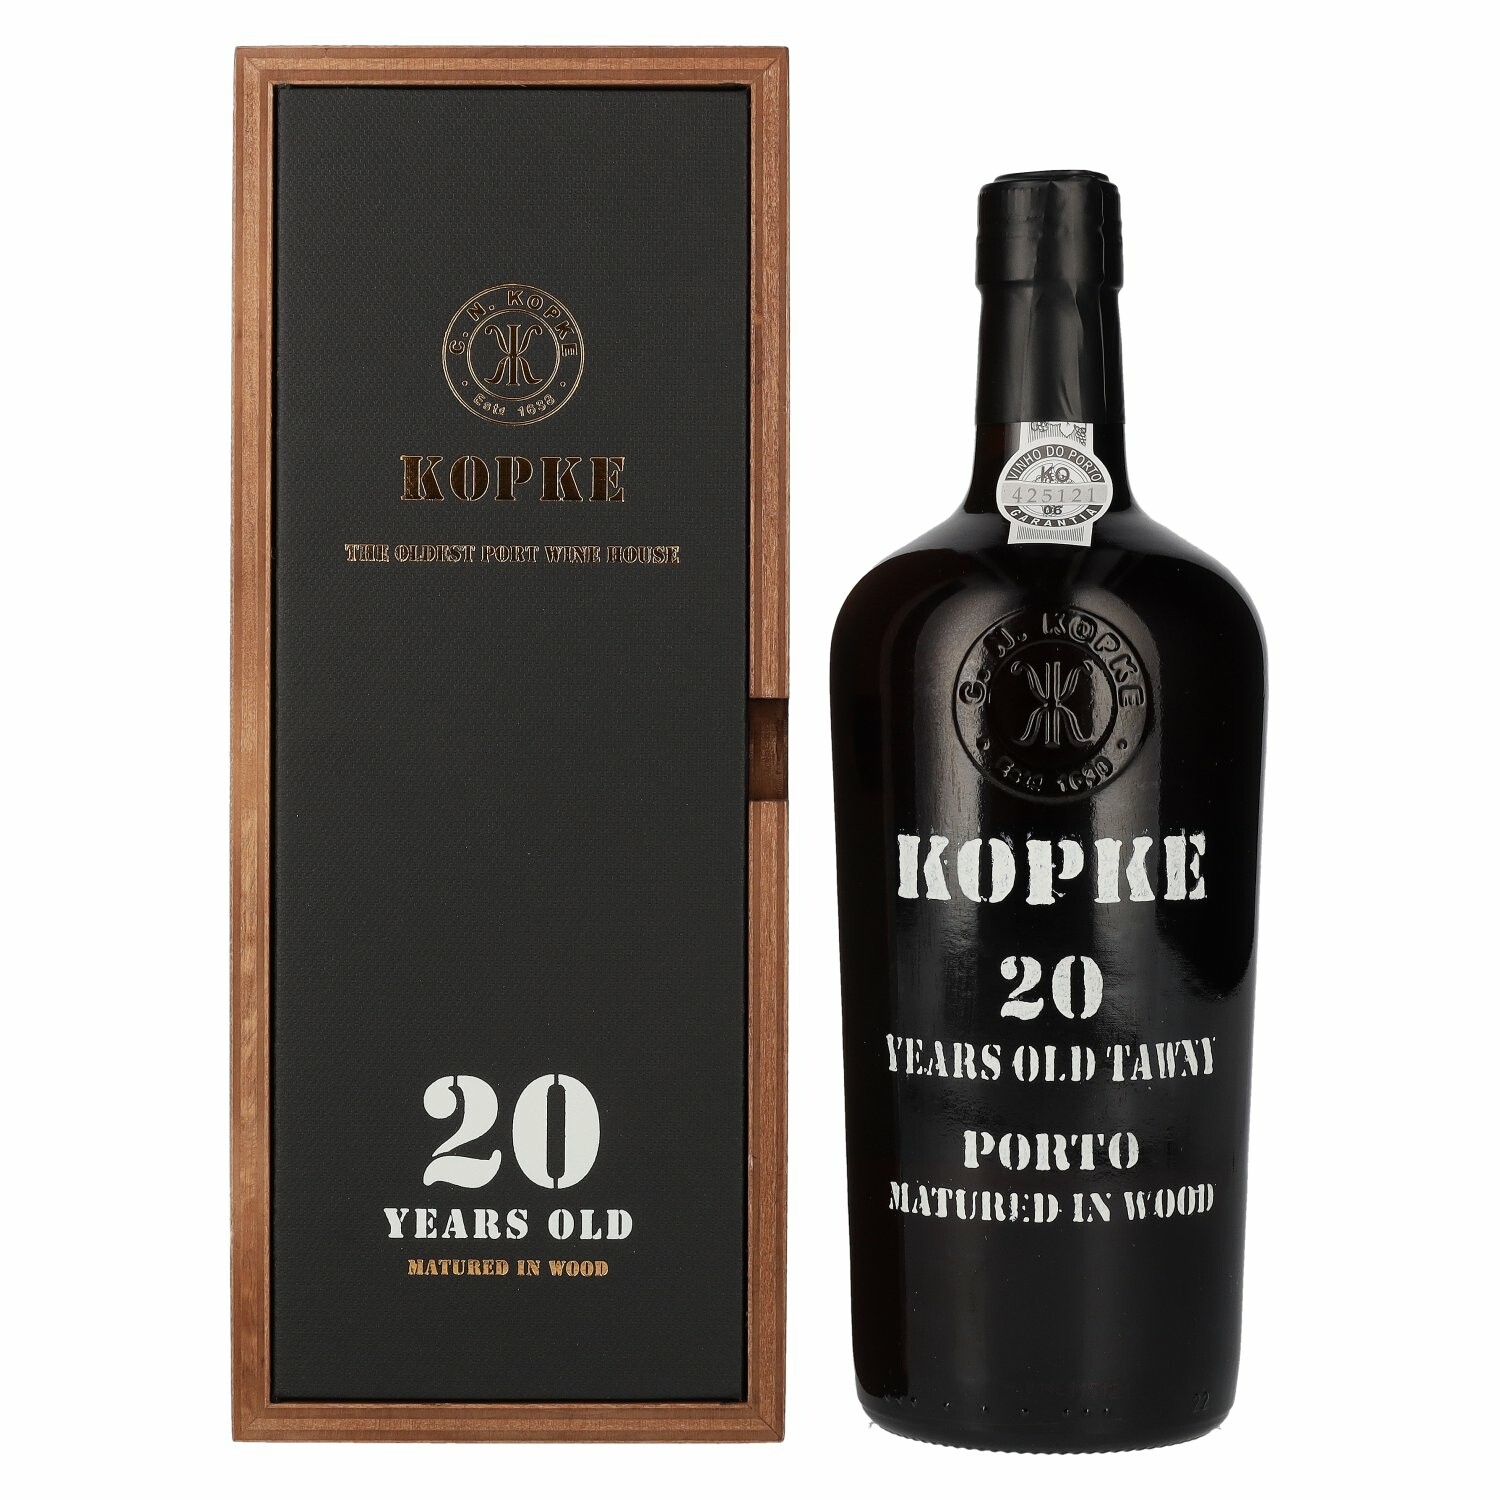 Kopke 20 Years Old TAWNY Porto 20% Vol. 0,75l in Holzkiste